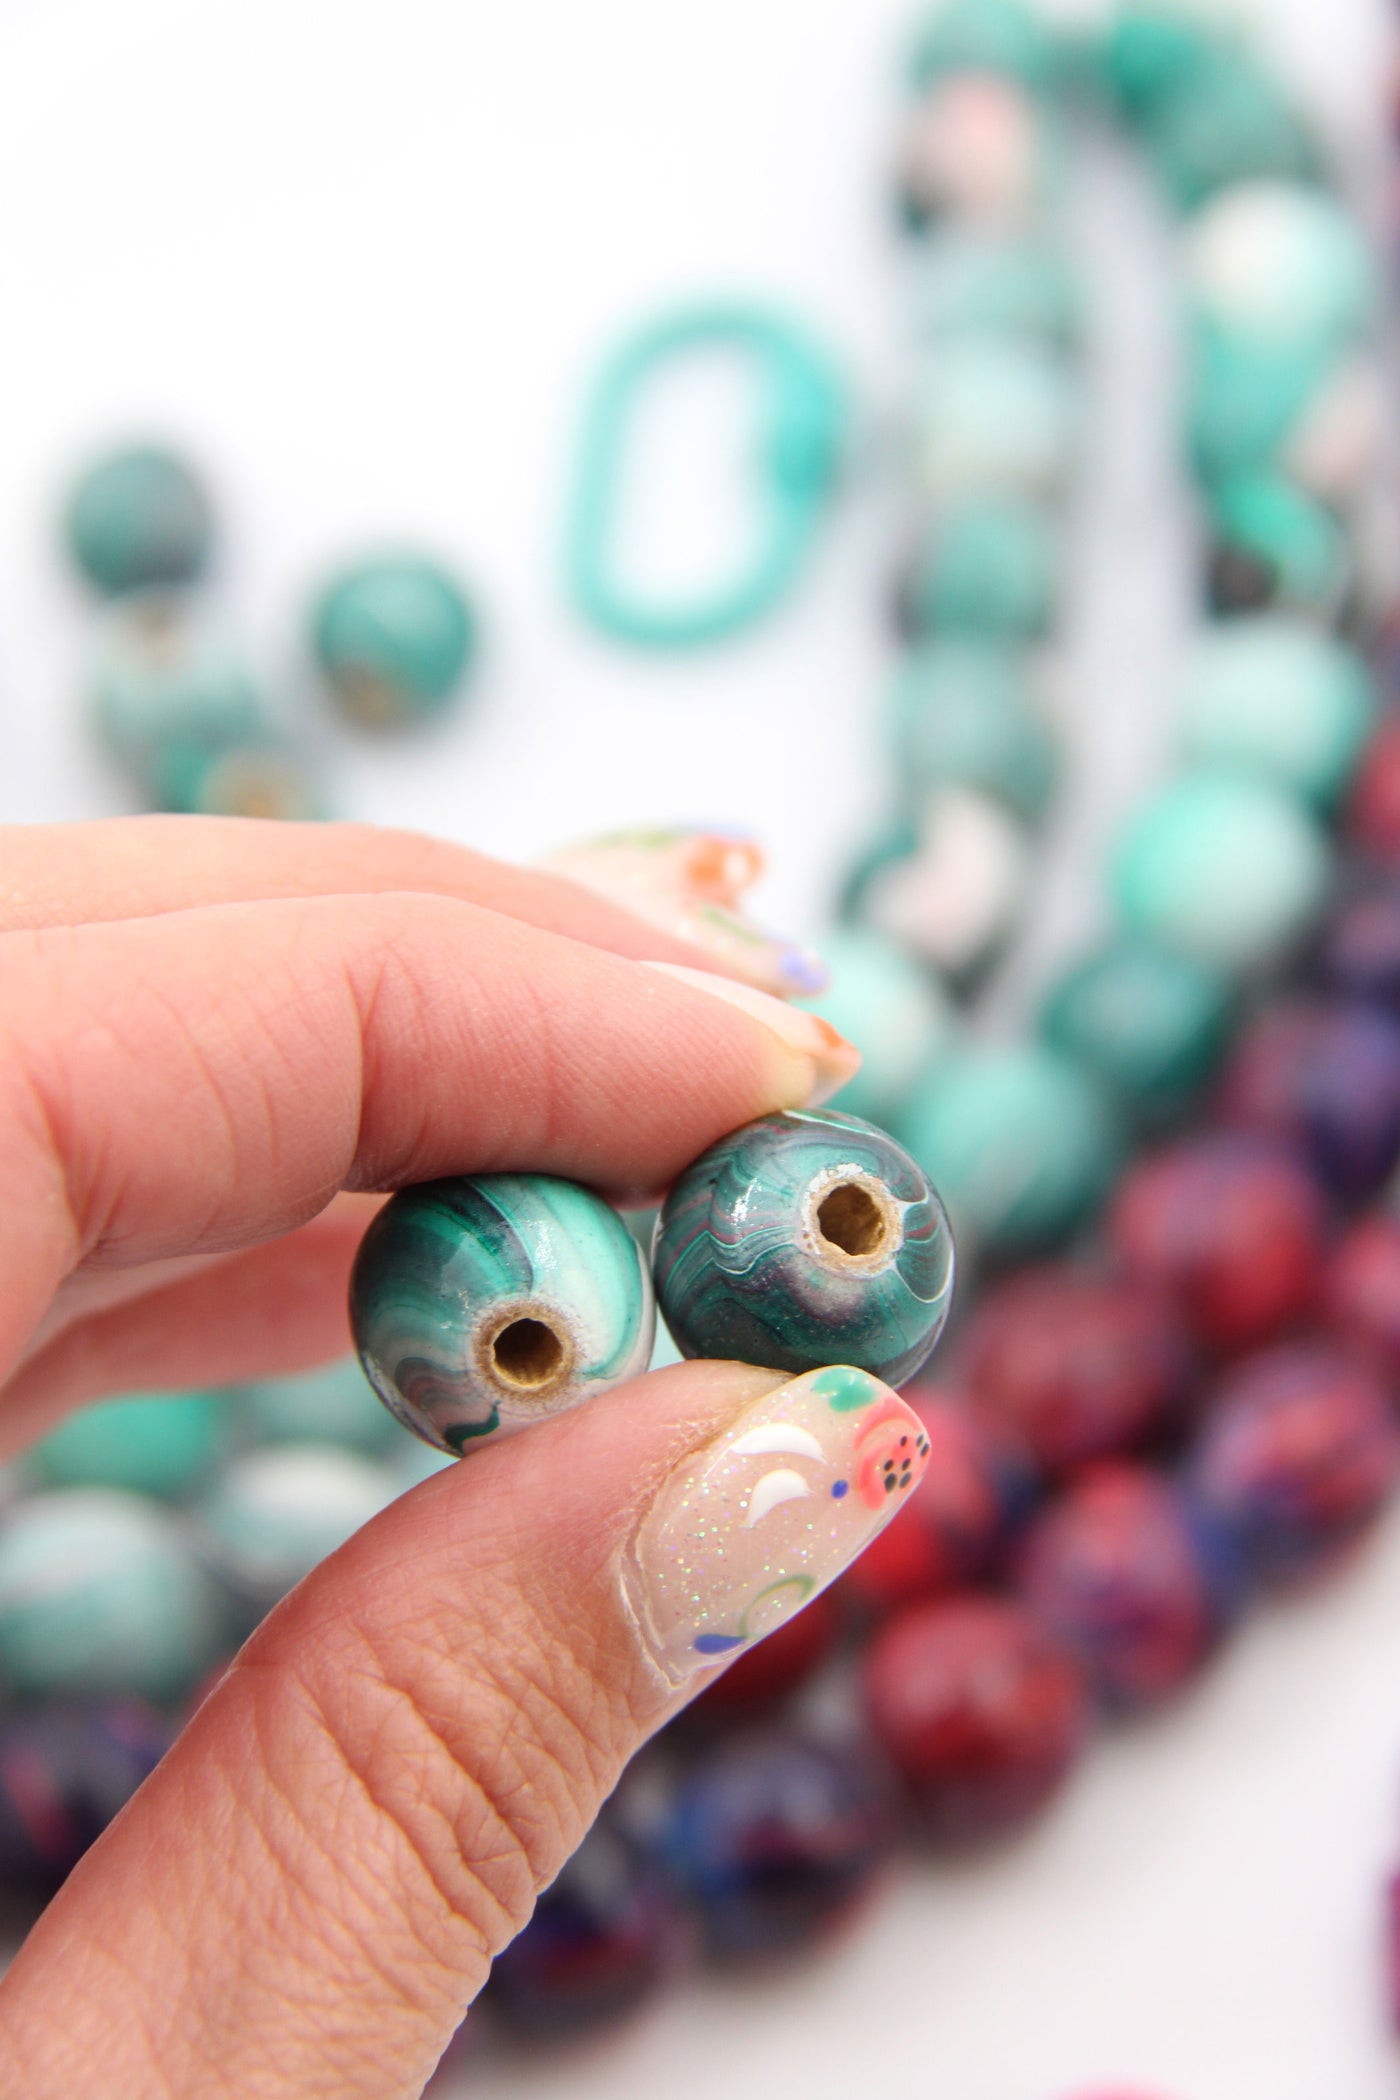 Vintage Marbleized Wood Beads, Round, 15mm, 18 beads